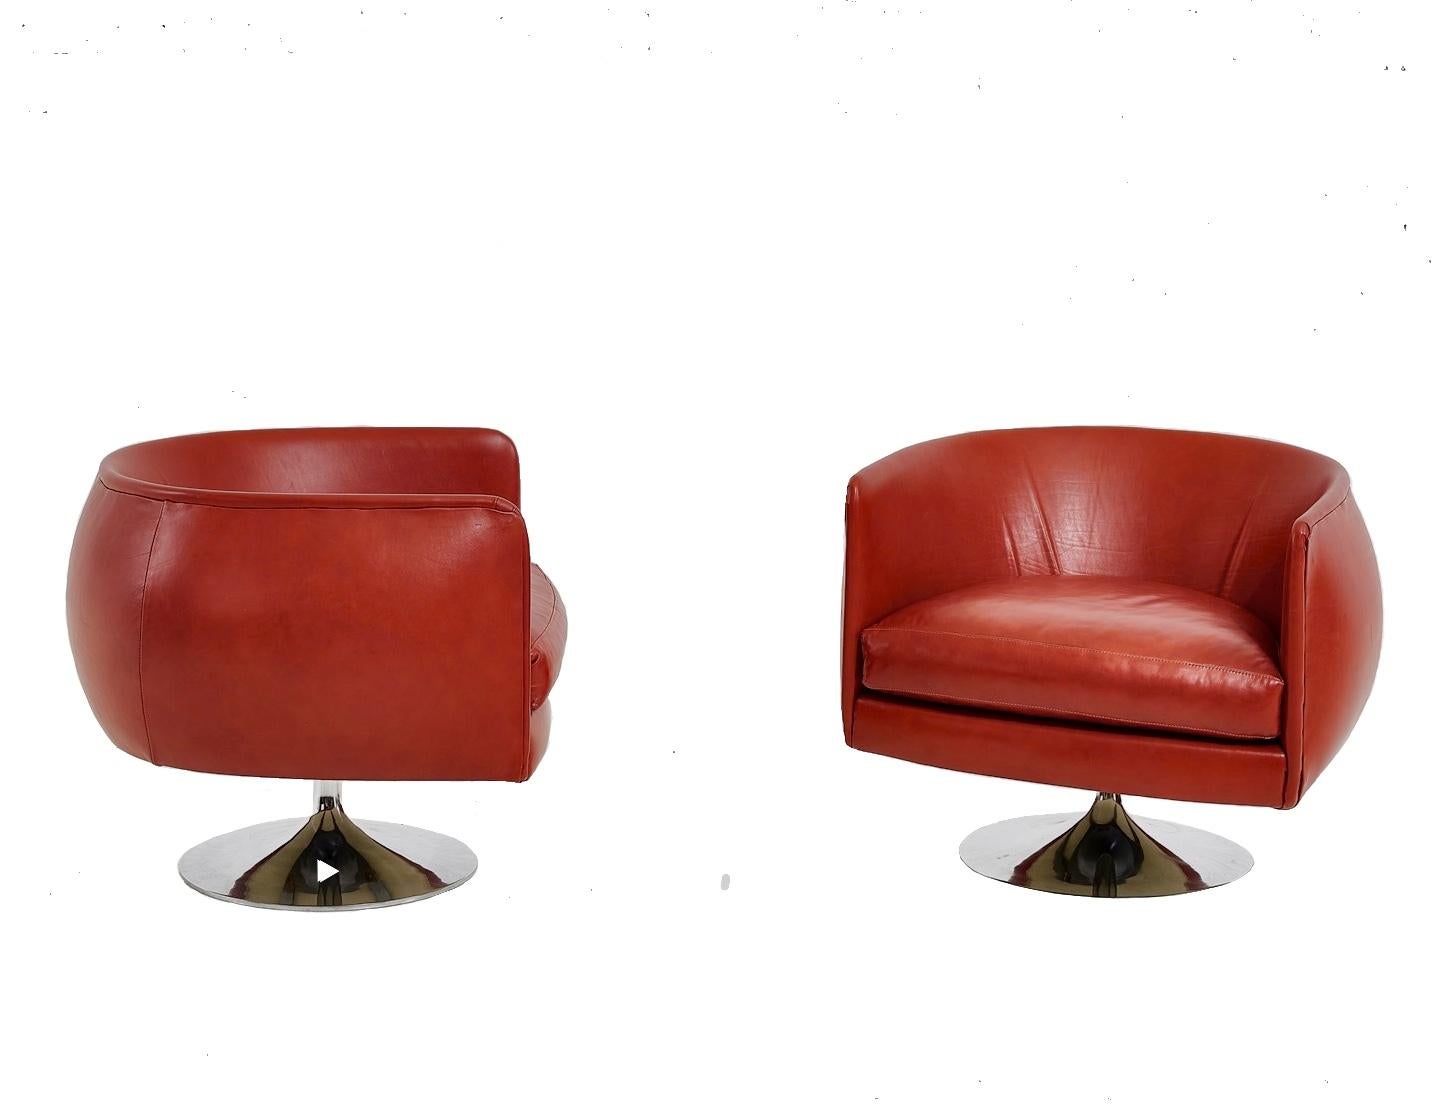 Joseph D'Urso pair leather Swivel lounge chairs, Knoll
1980.